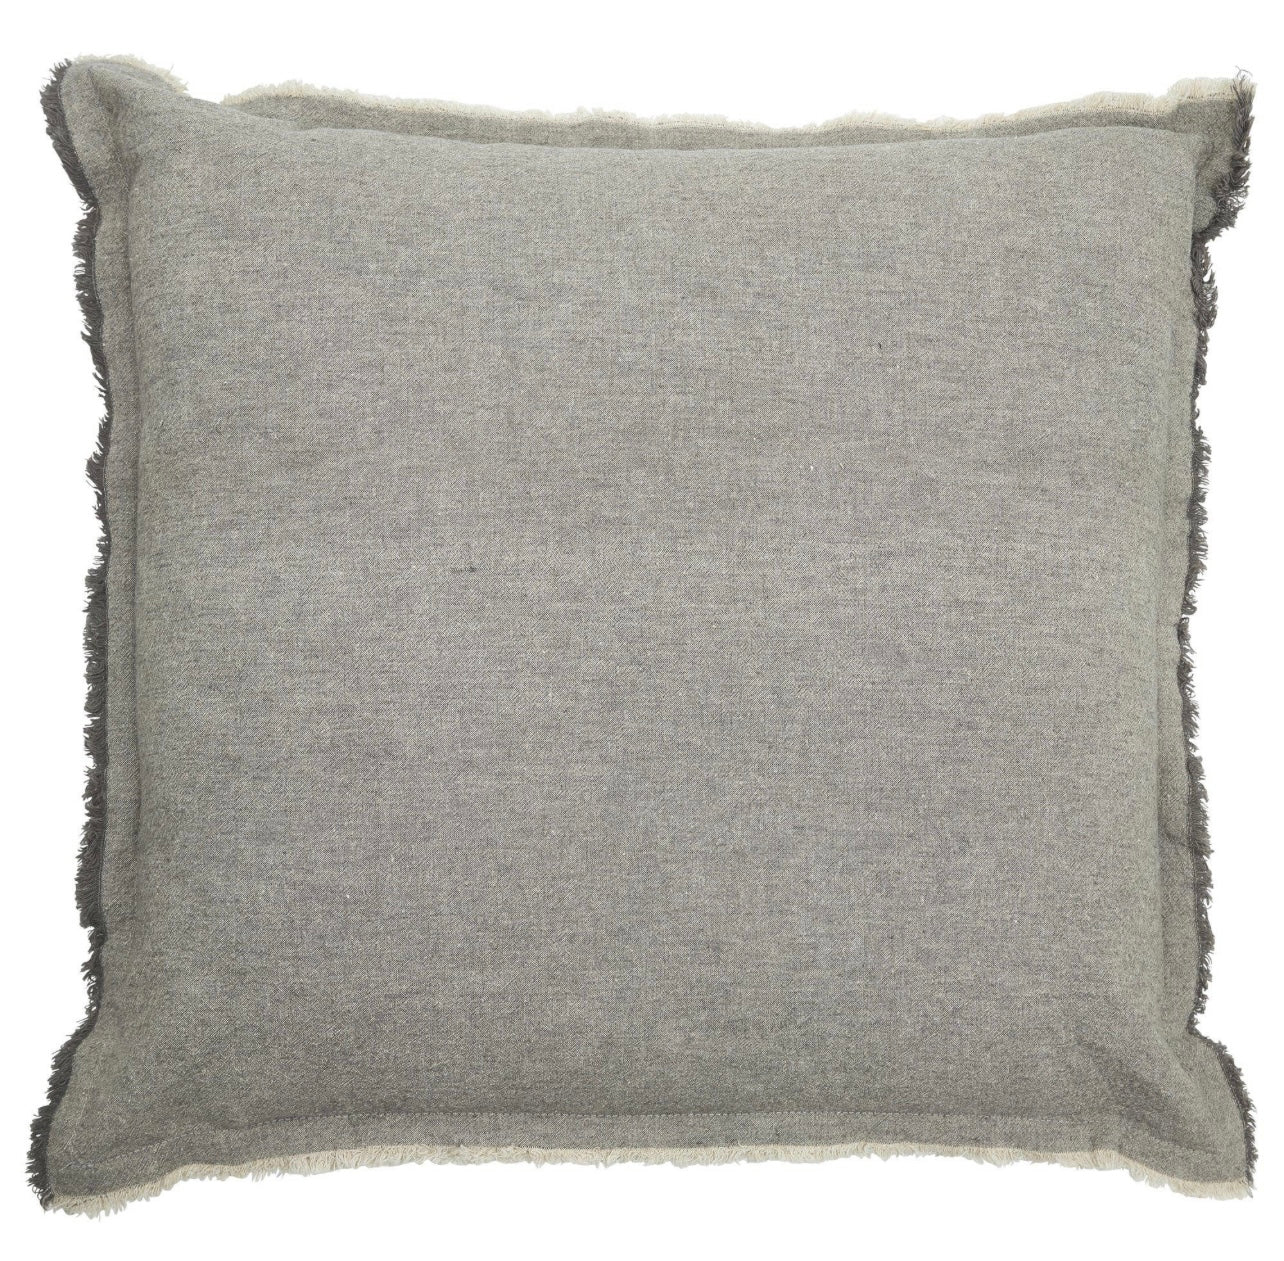 Grey Linen Cushions (2 colours)